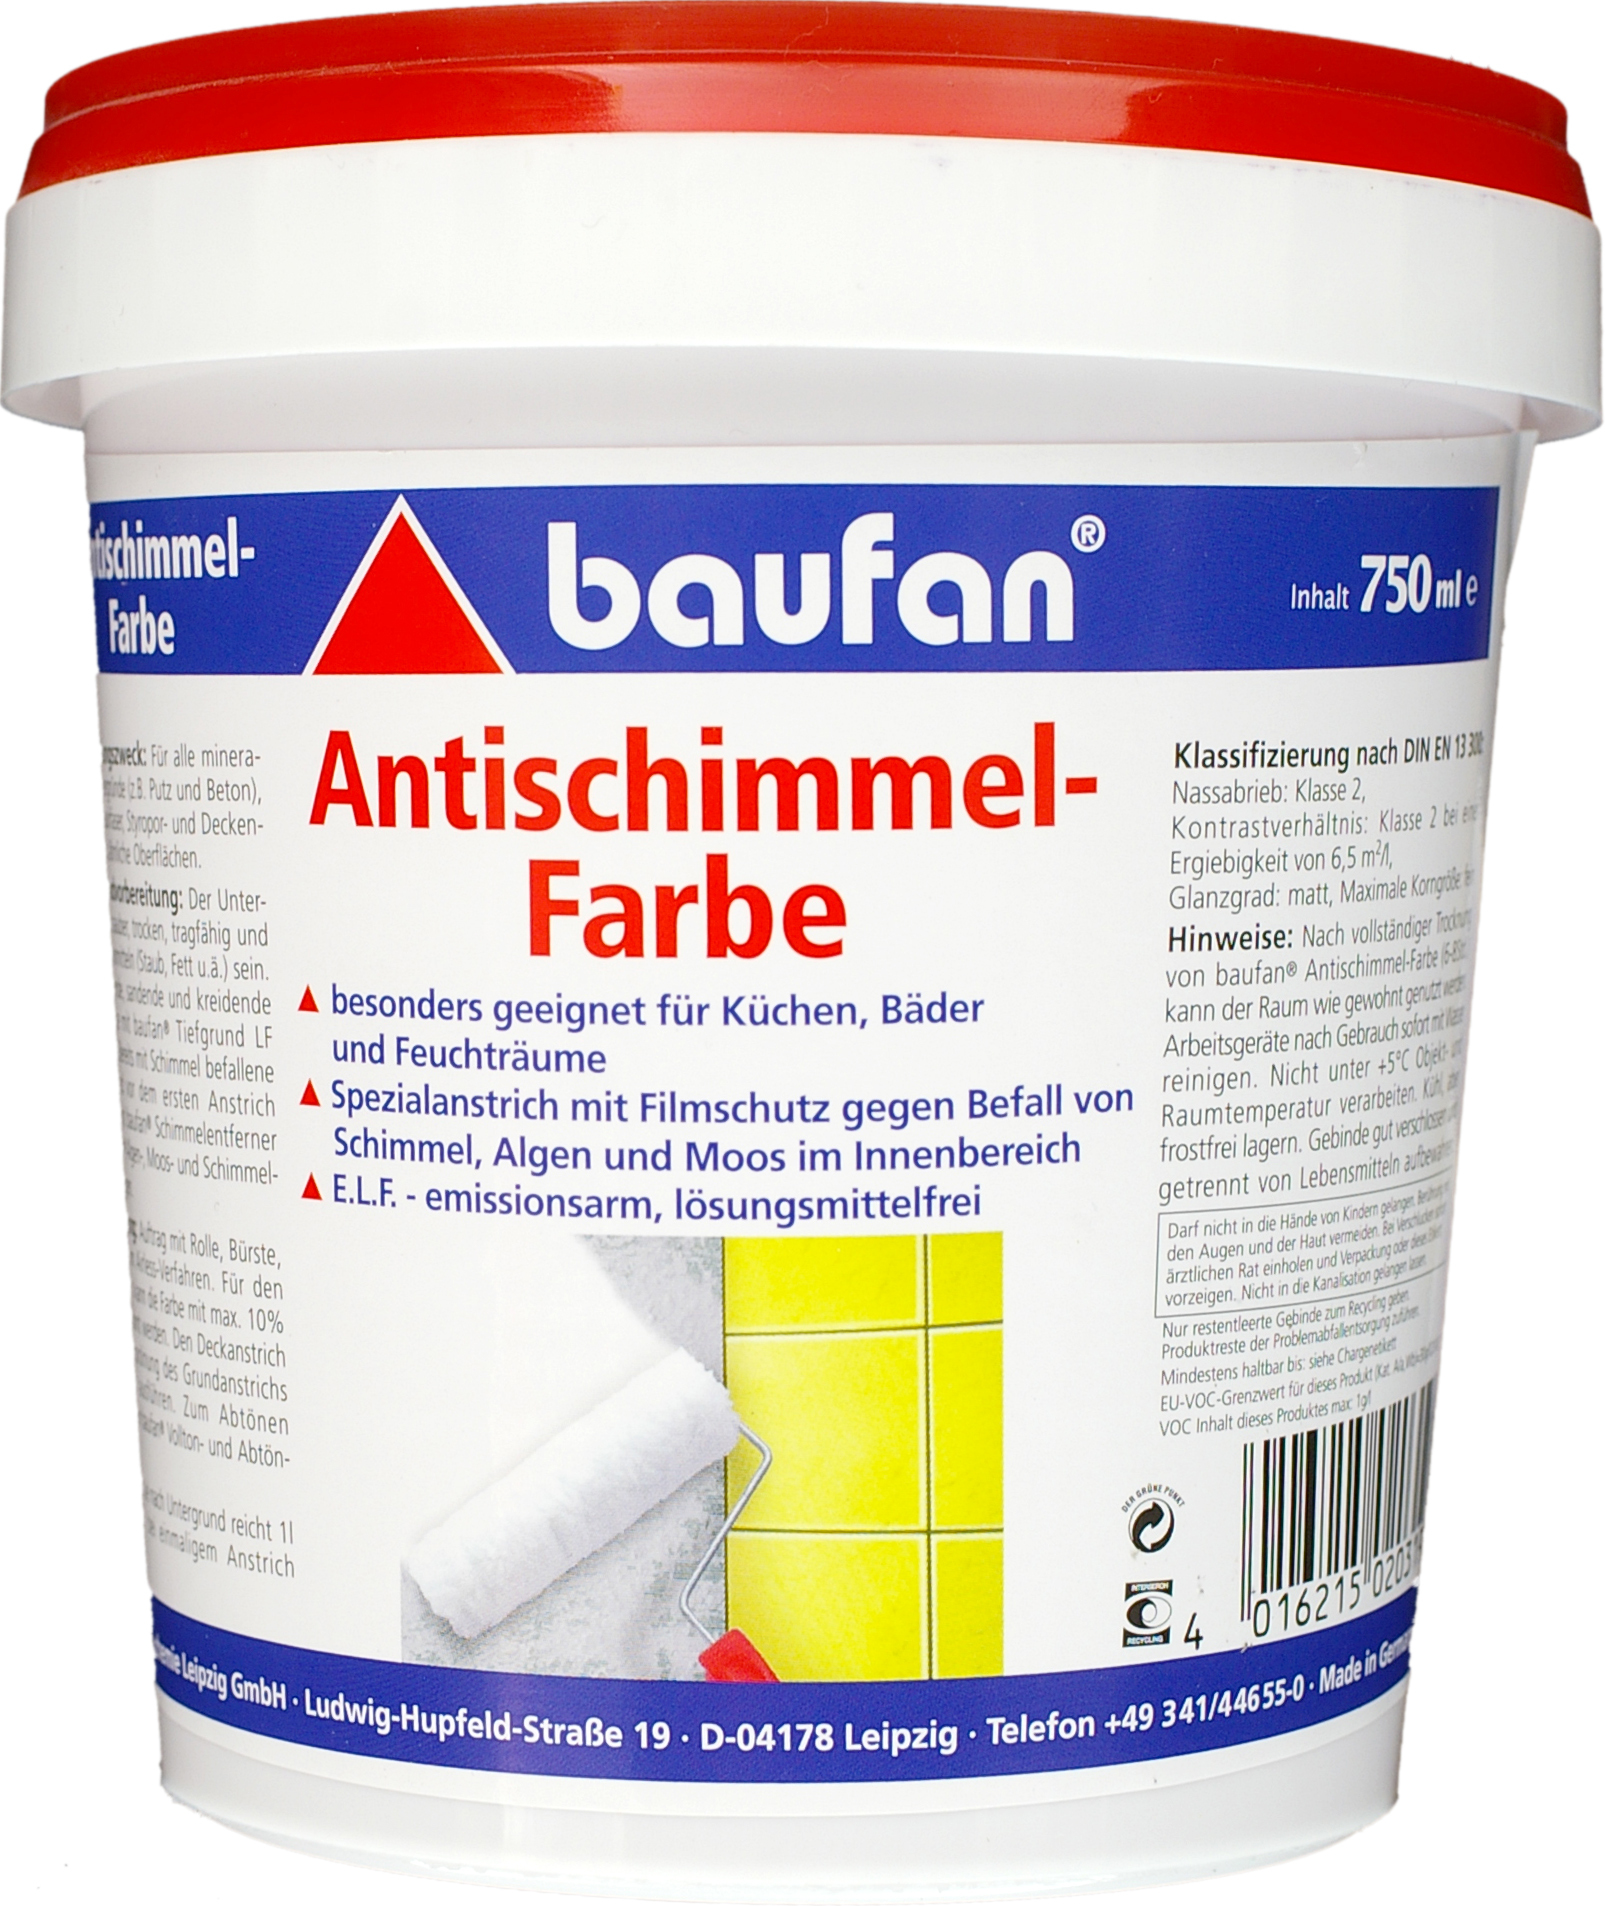 Baufan Bauchemie Leipzig GmbH Baufan Anti-Schimmelfarbe 750 ml